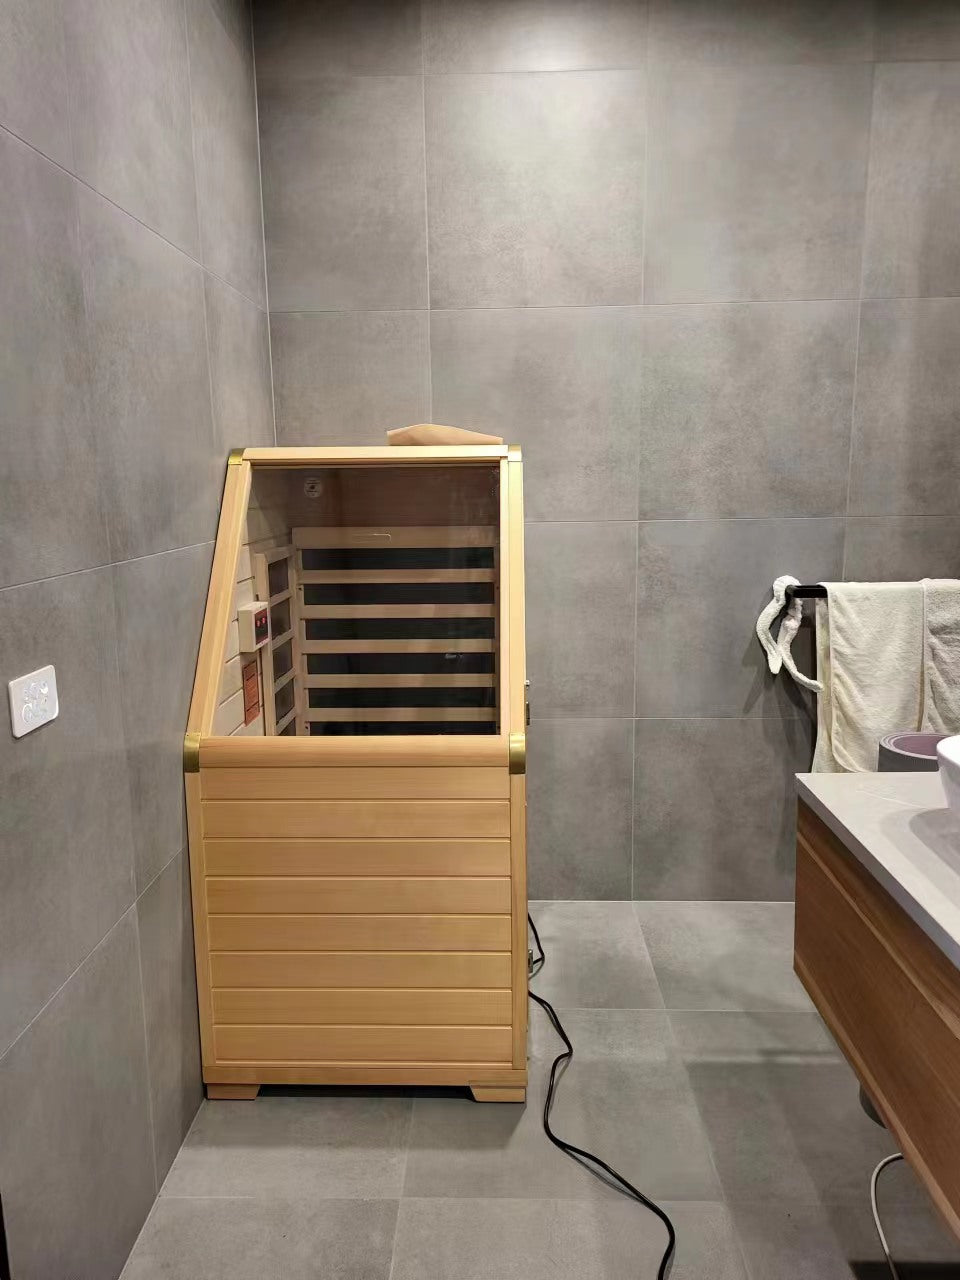 Kylin Compact Carbon Fibre Portable Sauna 1 Person Home Sauna Room KY-1D6